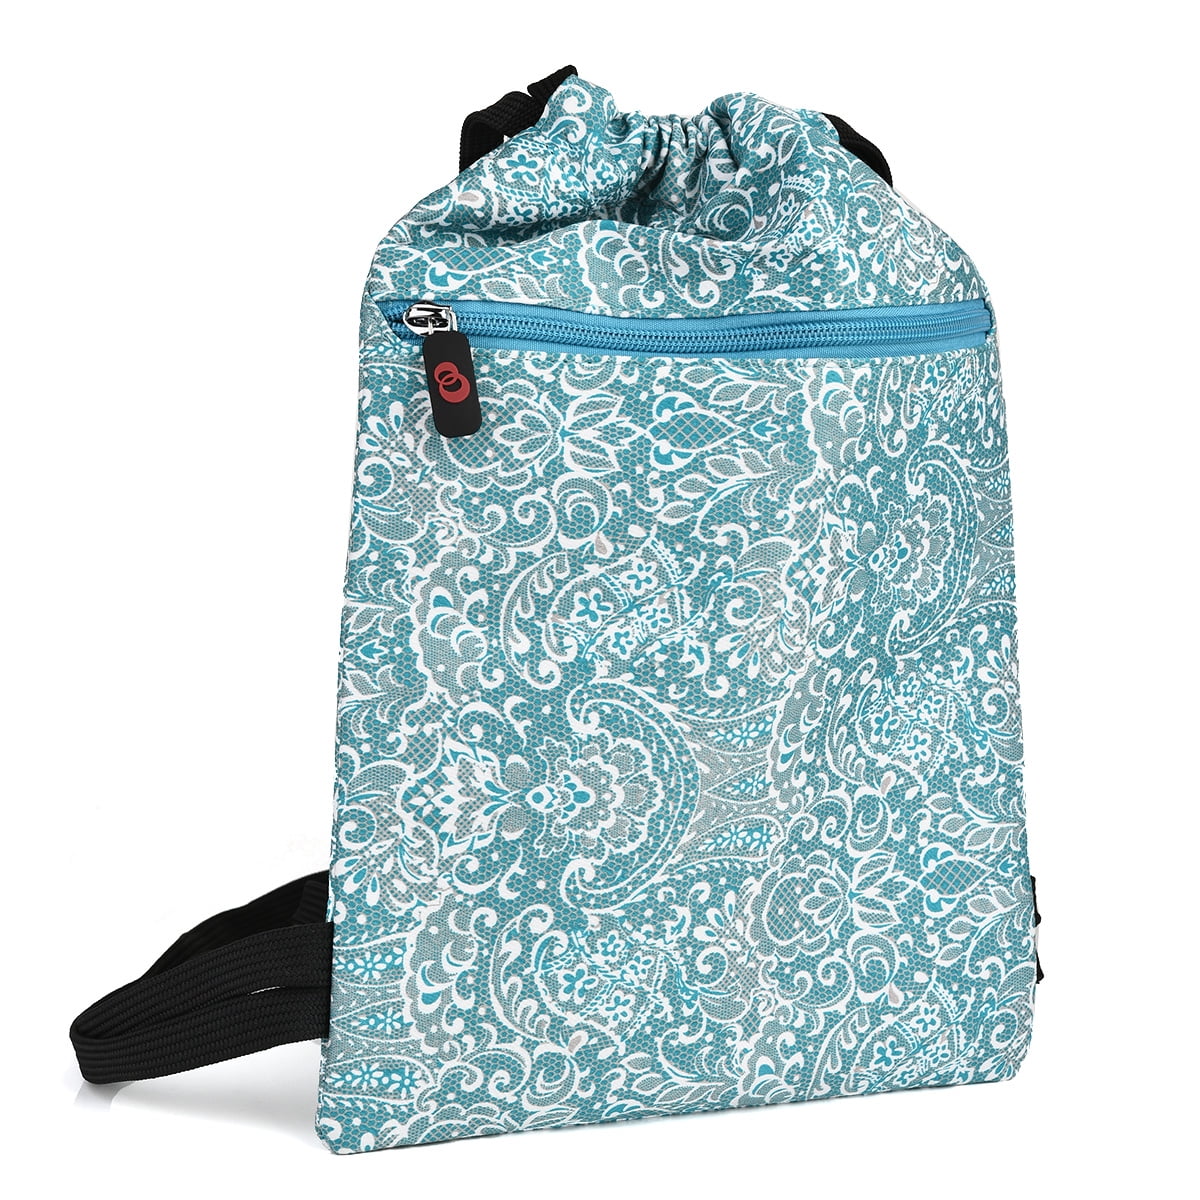 Sunflower Print Drawstring Bag Waterproof Dance Cinch Bag Adjustable Gym Sackpack Printed Sport Backpack For Hiking Swimming Beach Outdoor